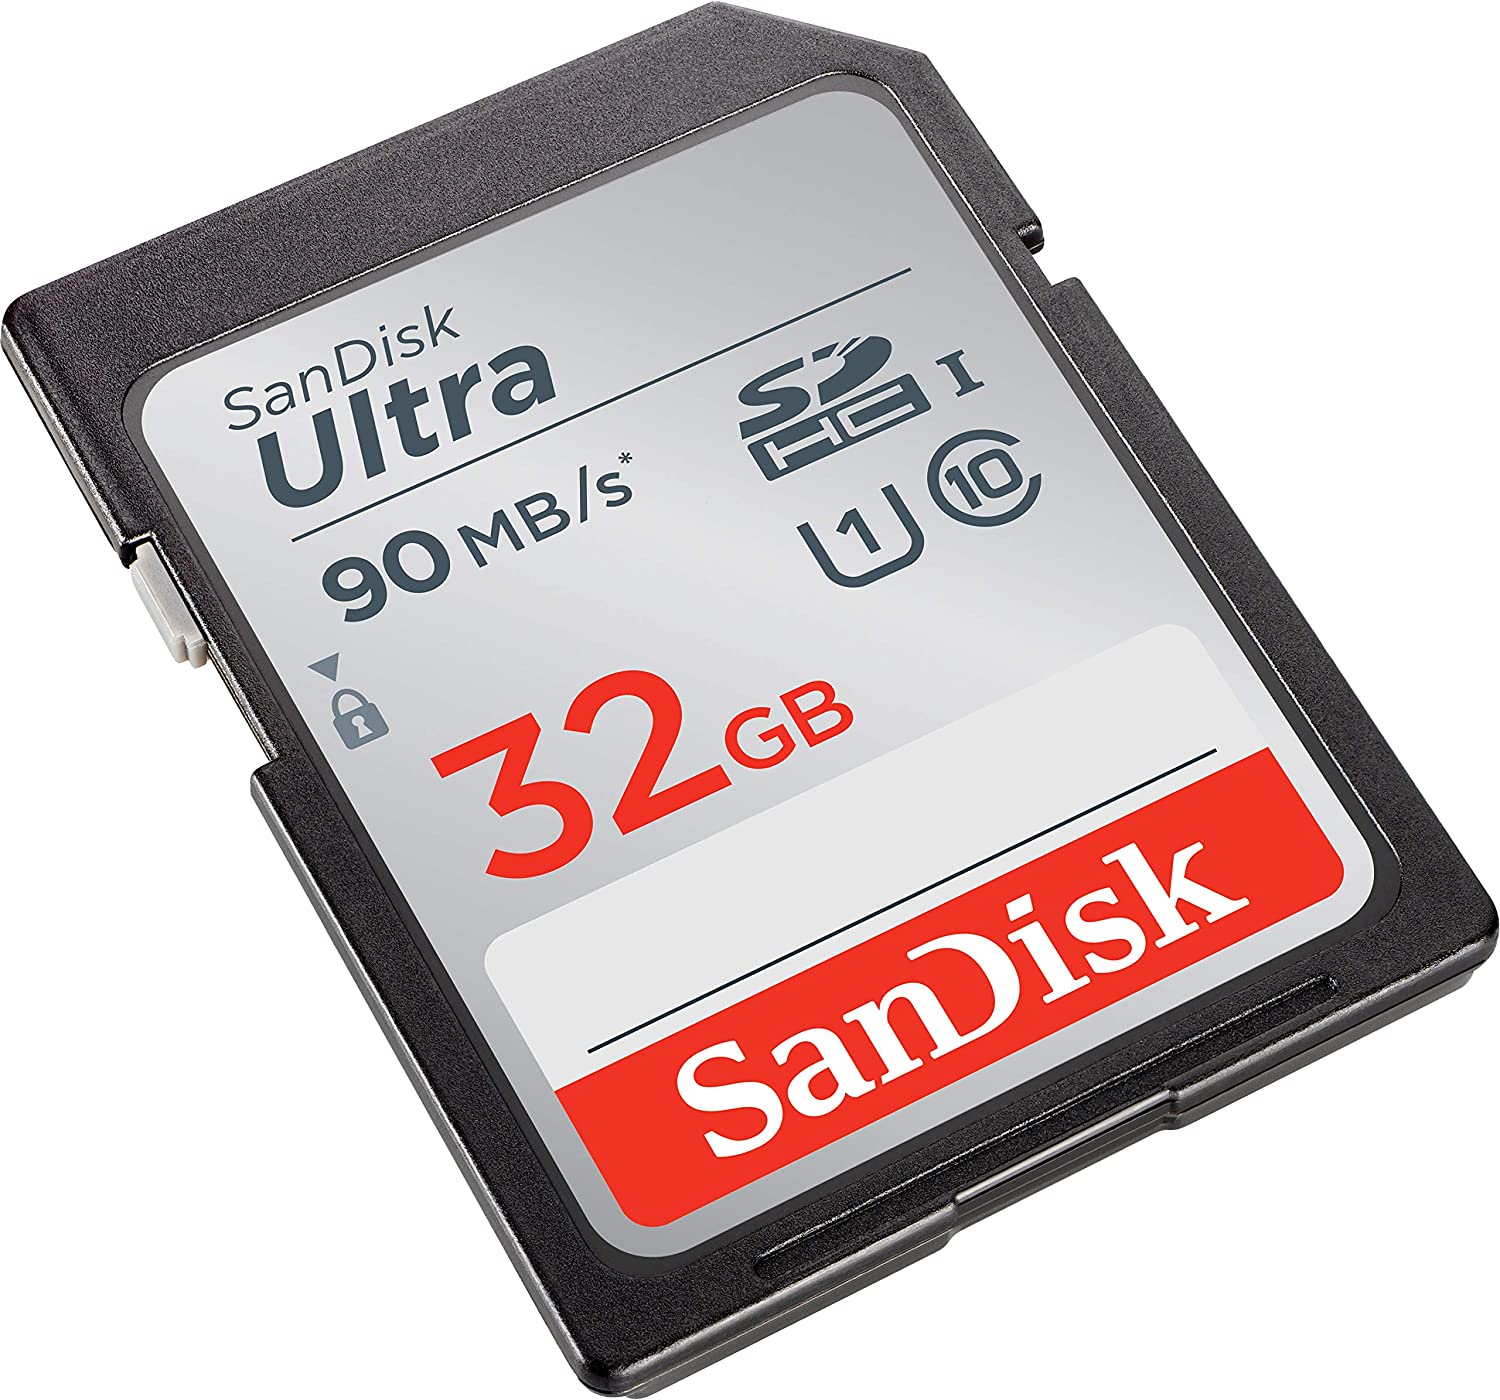 SanDisk 32GB Ultra SDHC UHS-I Memory Card - 90MB/s, C10, U1, Full HD, SD Card - SDSDUNR-032G-GN6IN - Pro-Distributing